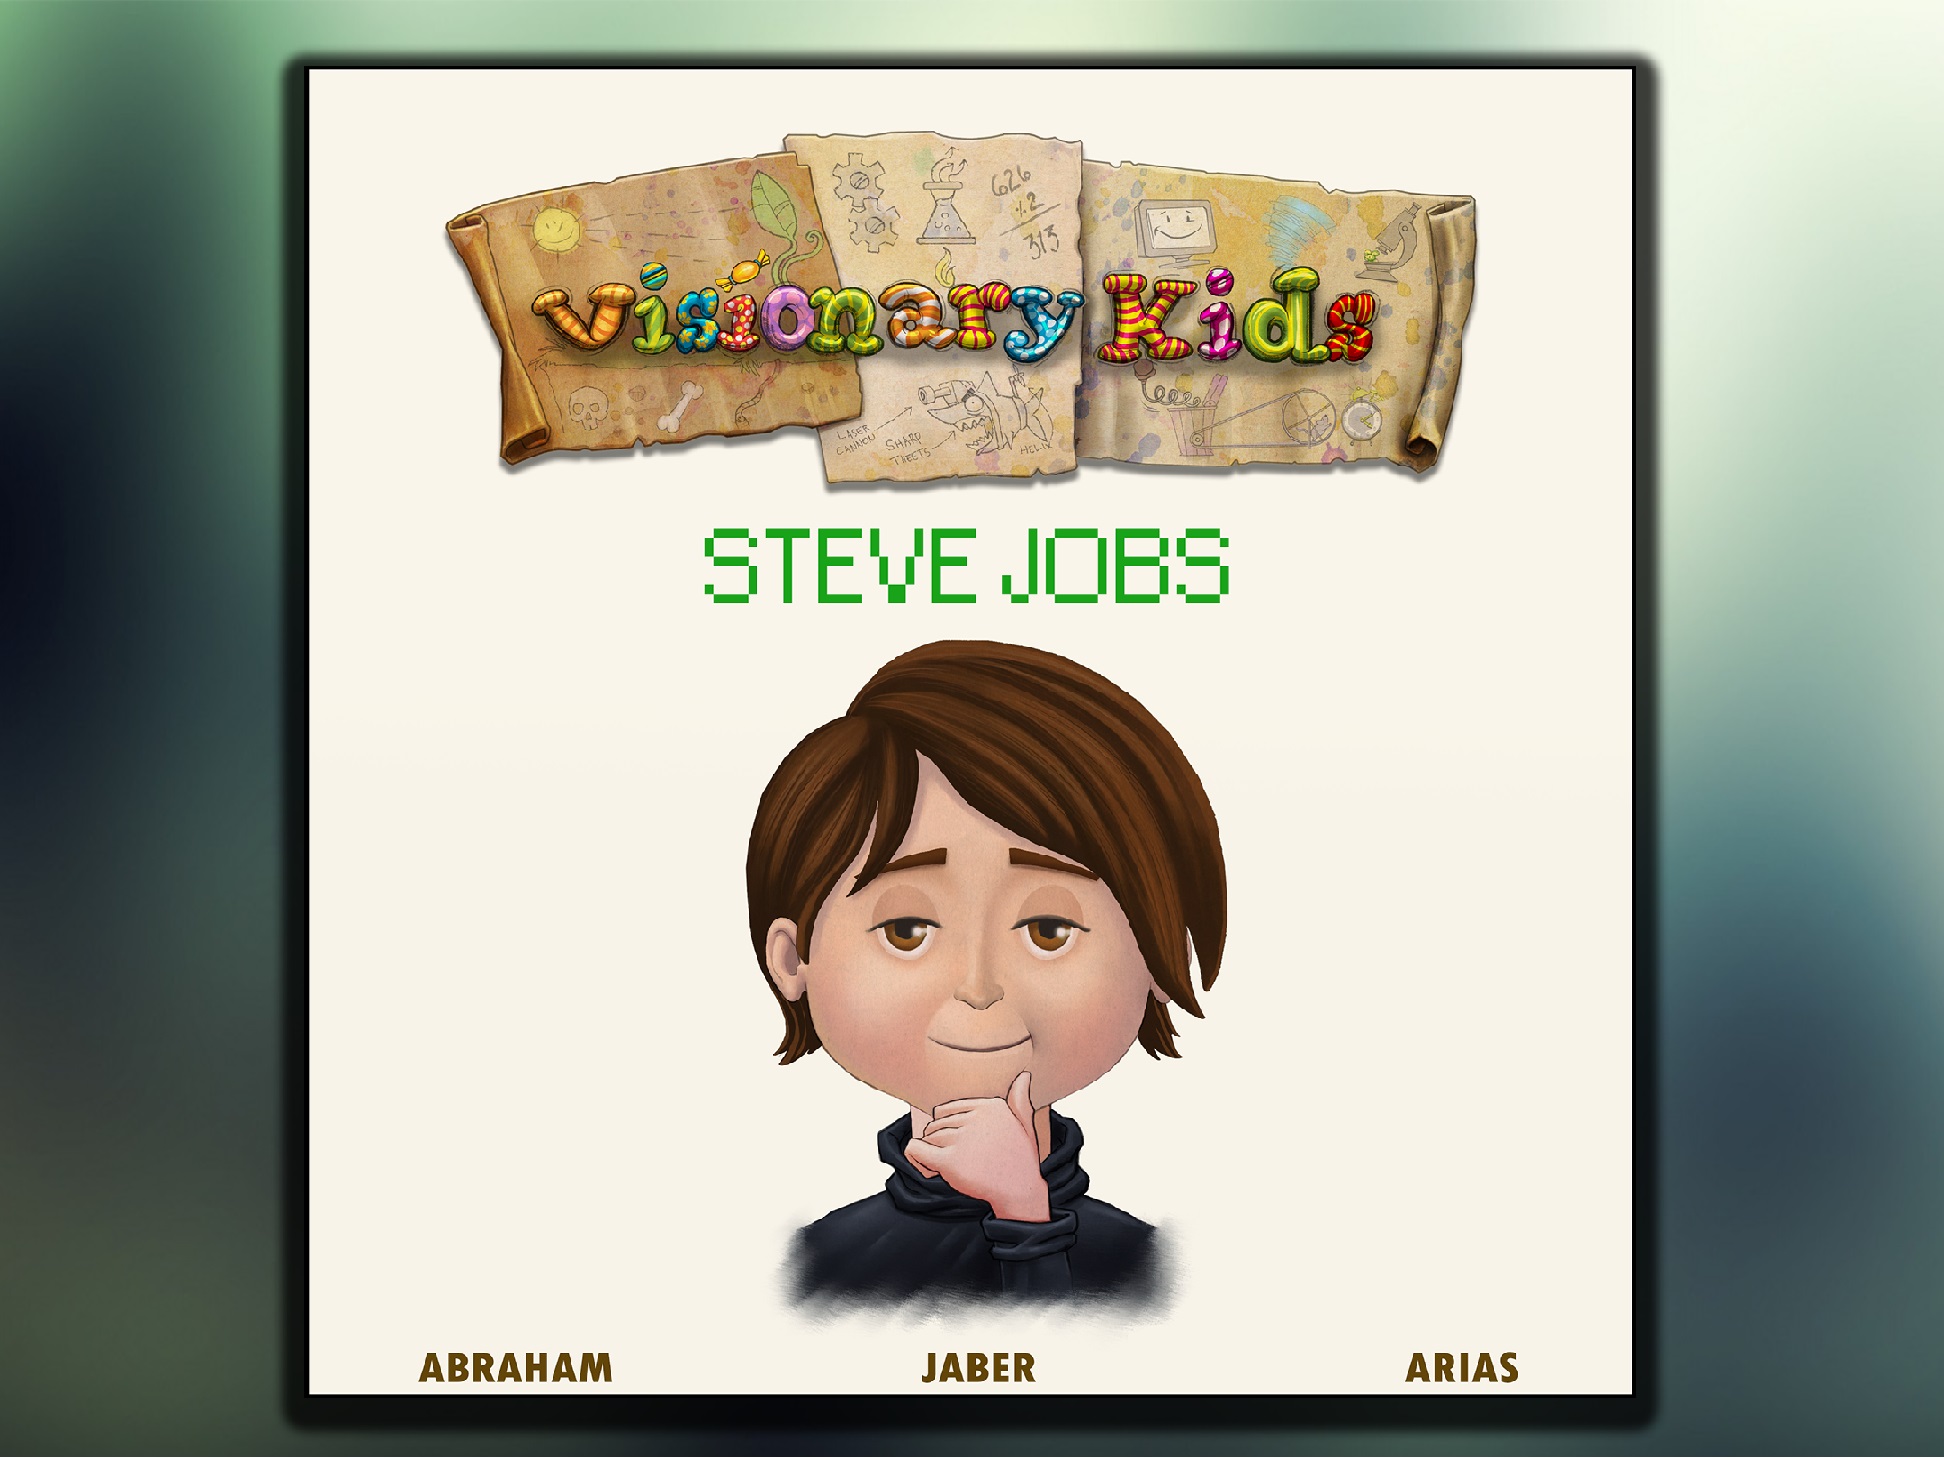 The first children's book about Steve Jobs